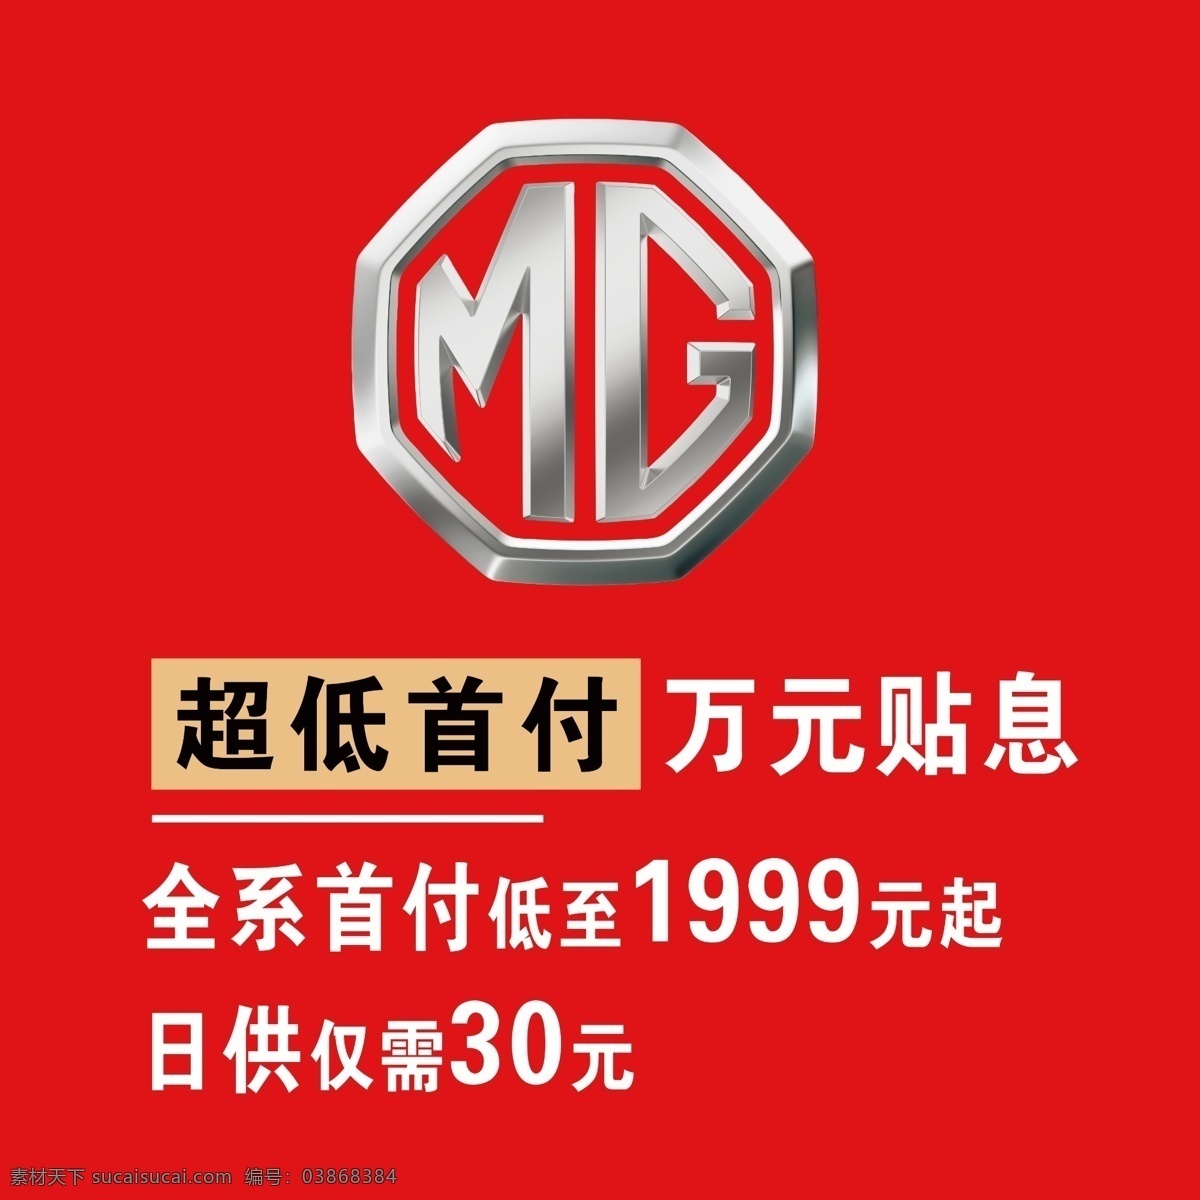 mg标图片 mg标 mg logo mg海报 红色背景